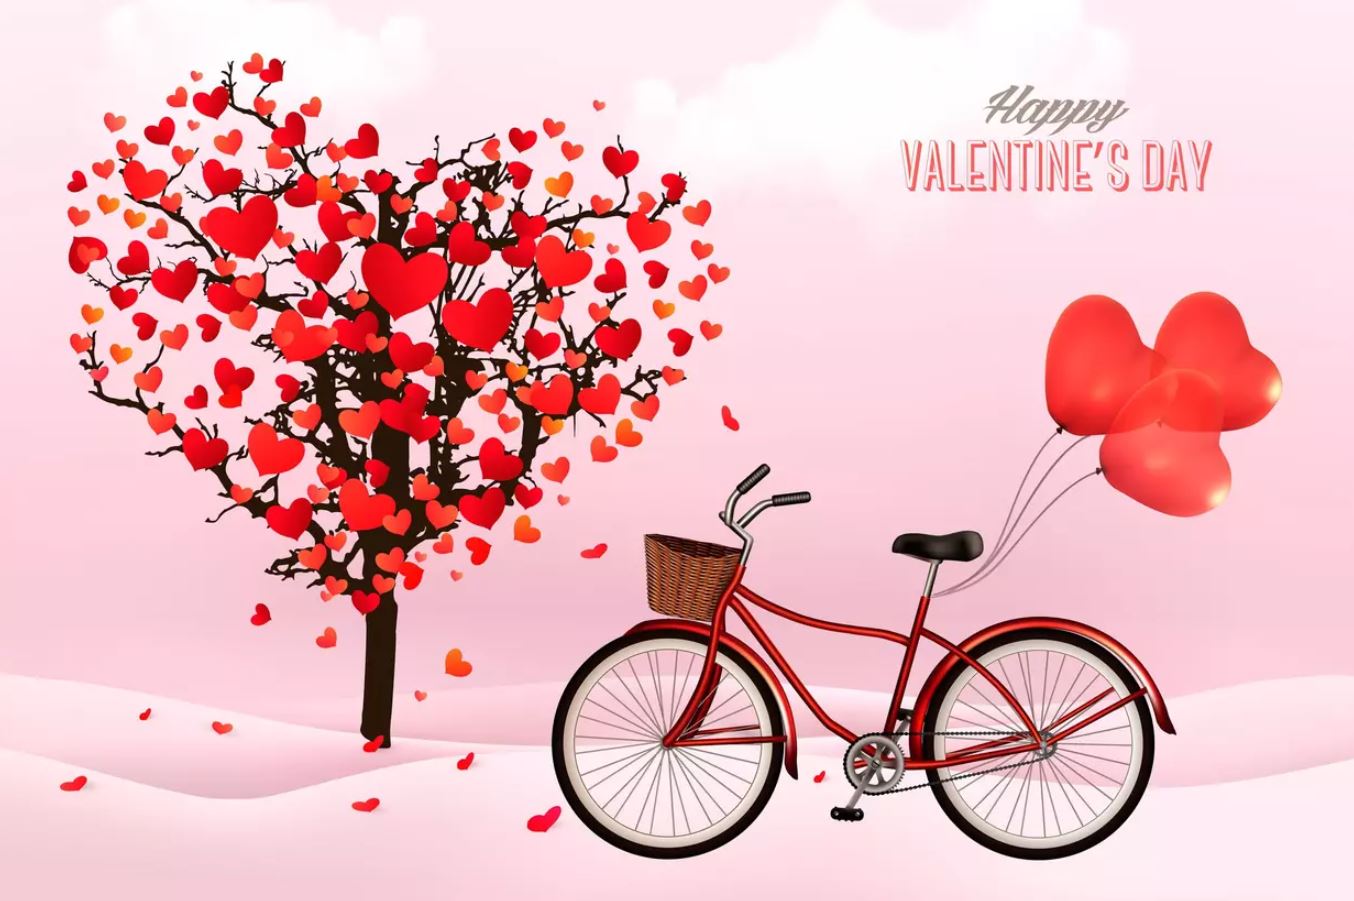 Bonne Saint Valentine et Valentin !